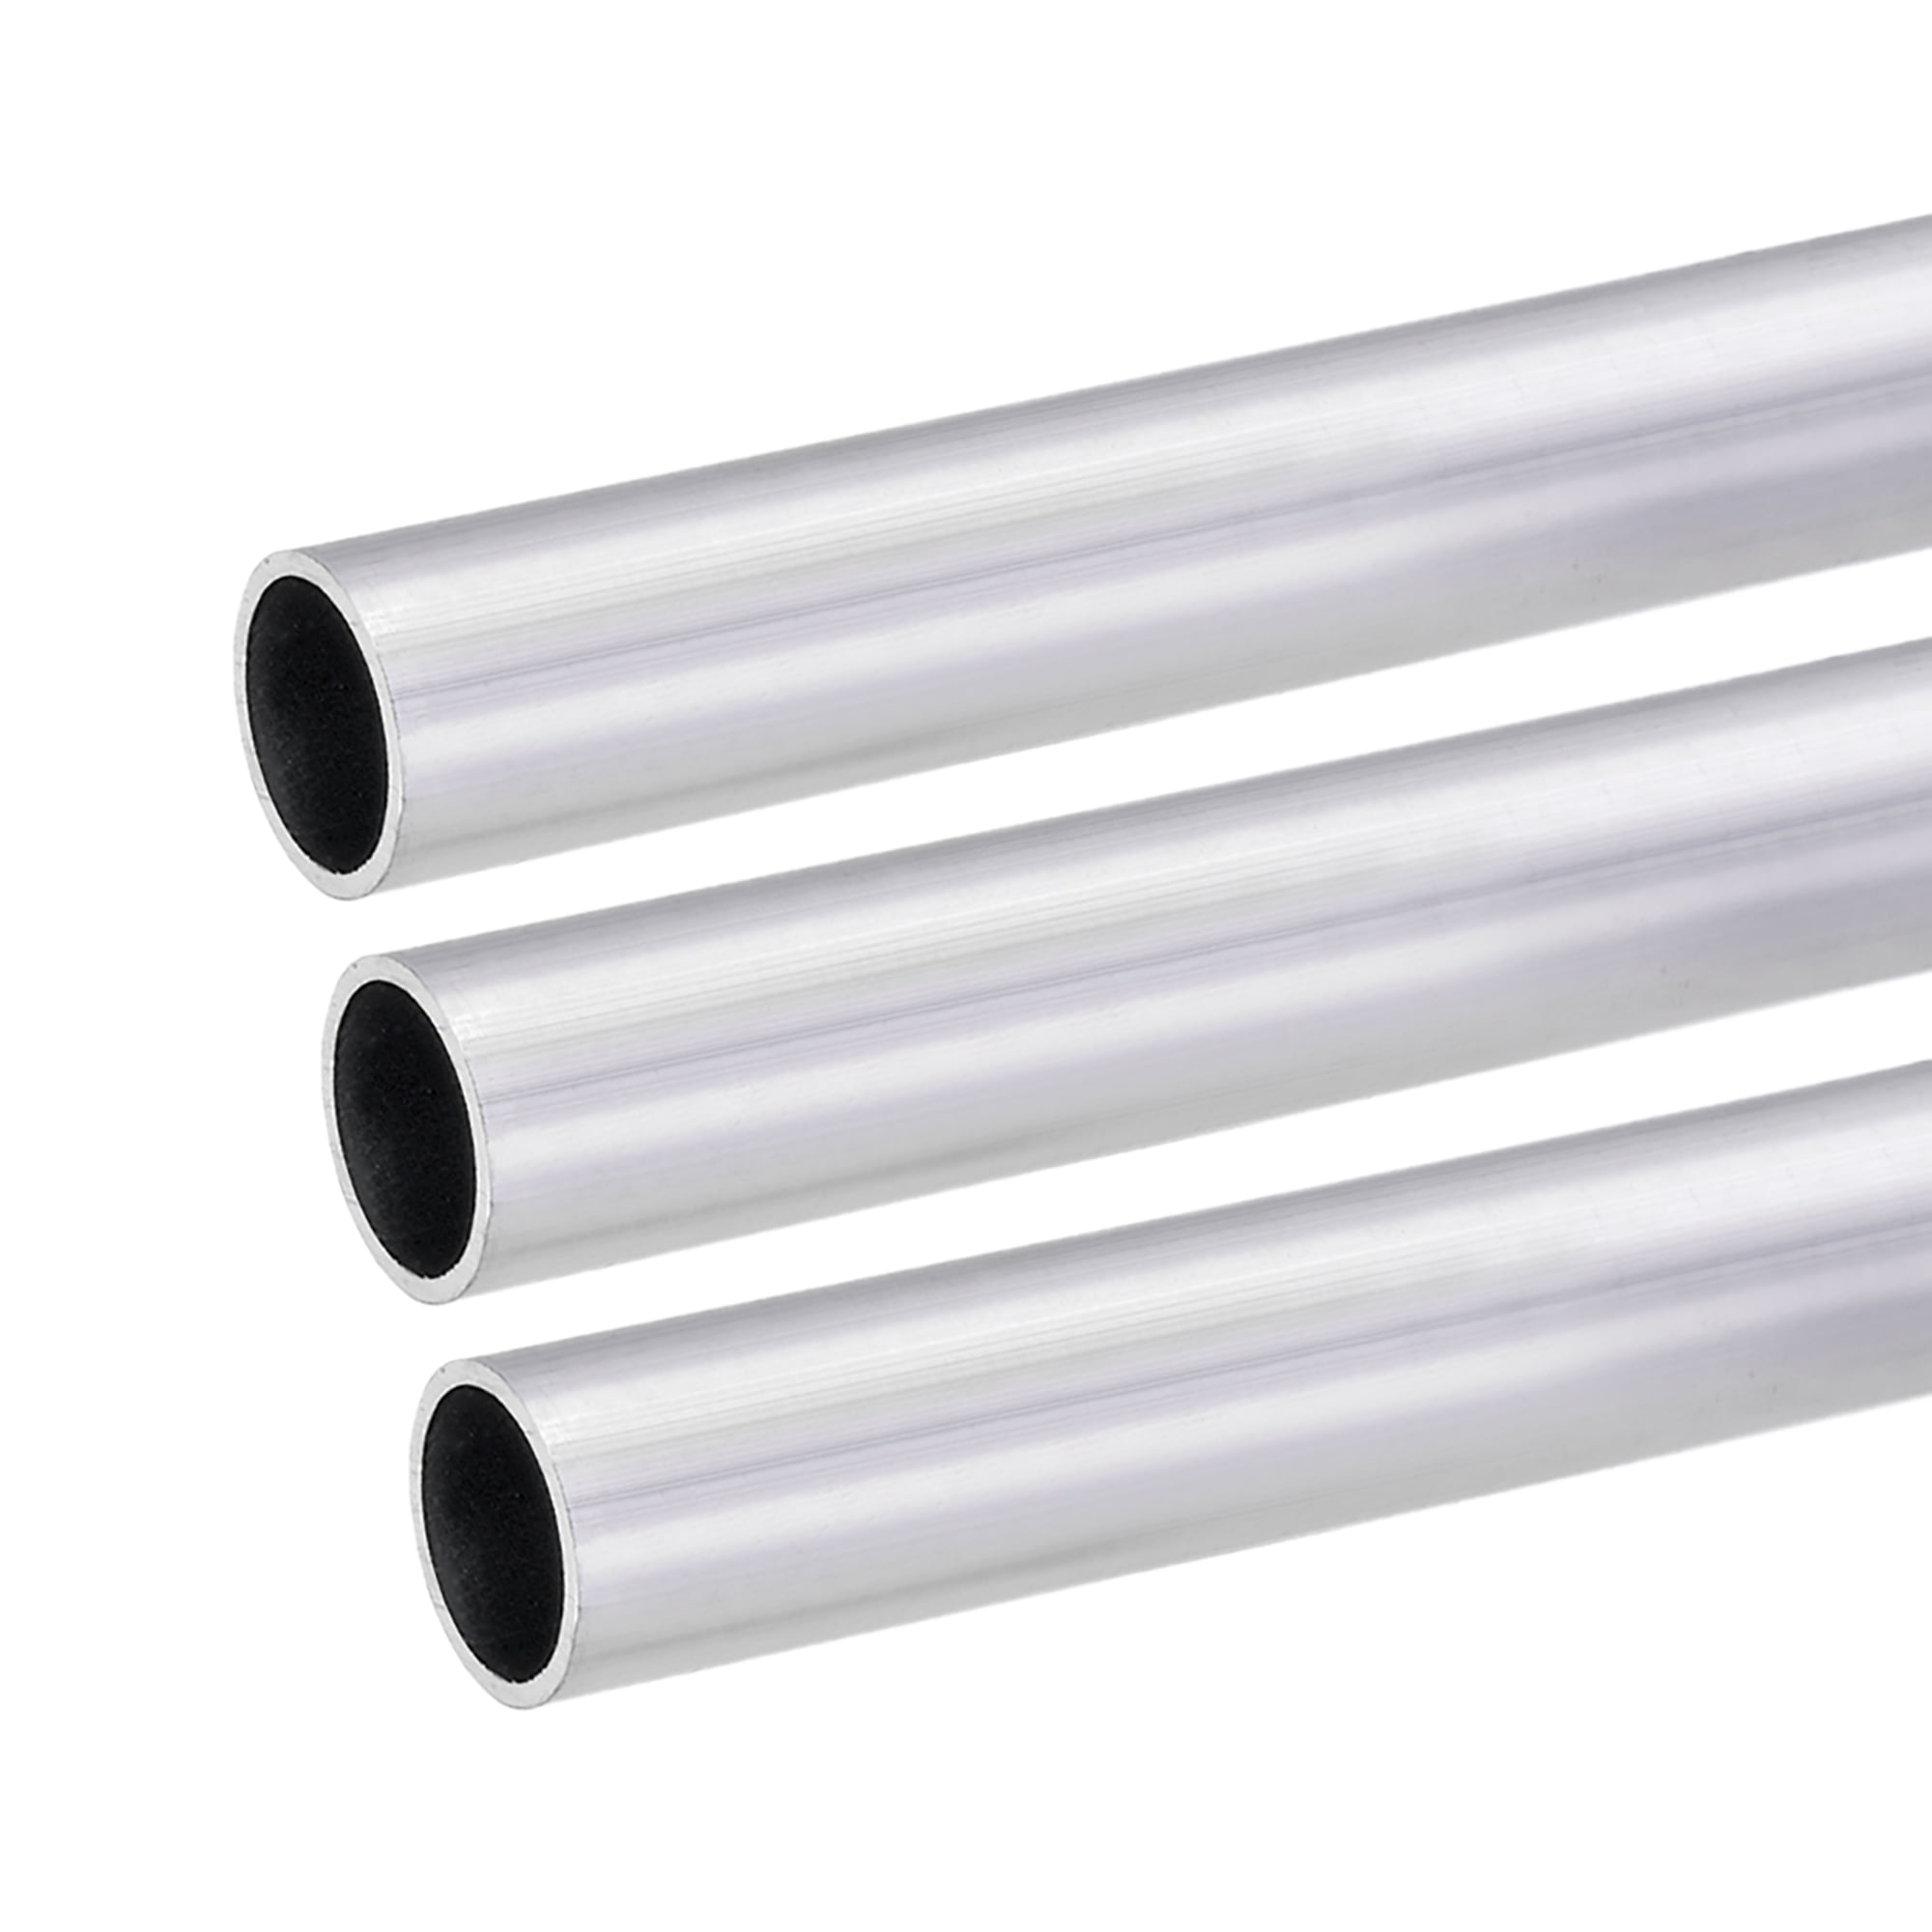 uxcell 6063 Aluminum Round Tube 21mm OD 13mm Inner Dia 300mm Length Seamless Straight Tubing 